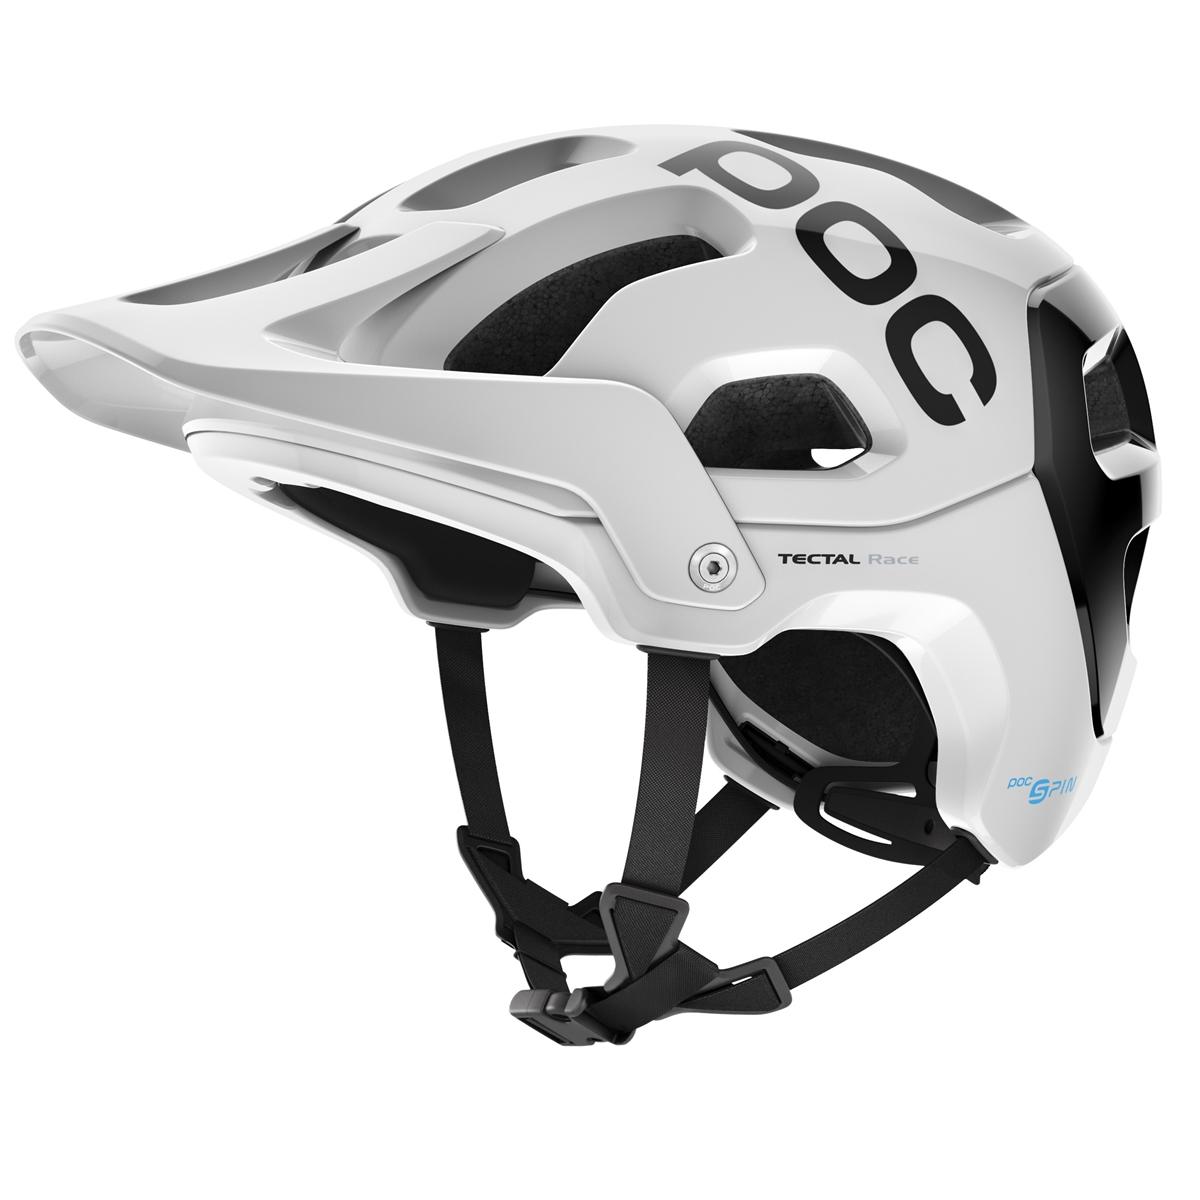 Enduro helmet Tectal Race Spin white size XL-XXL (59-62cm)